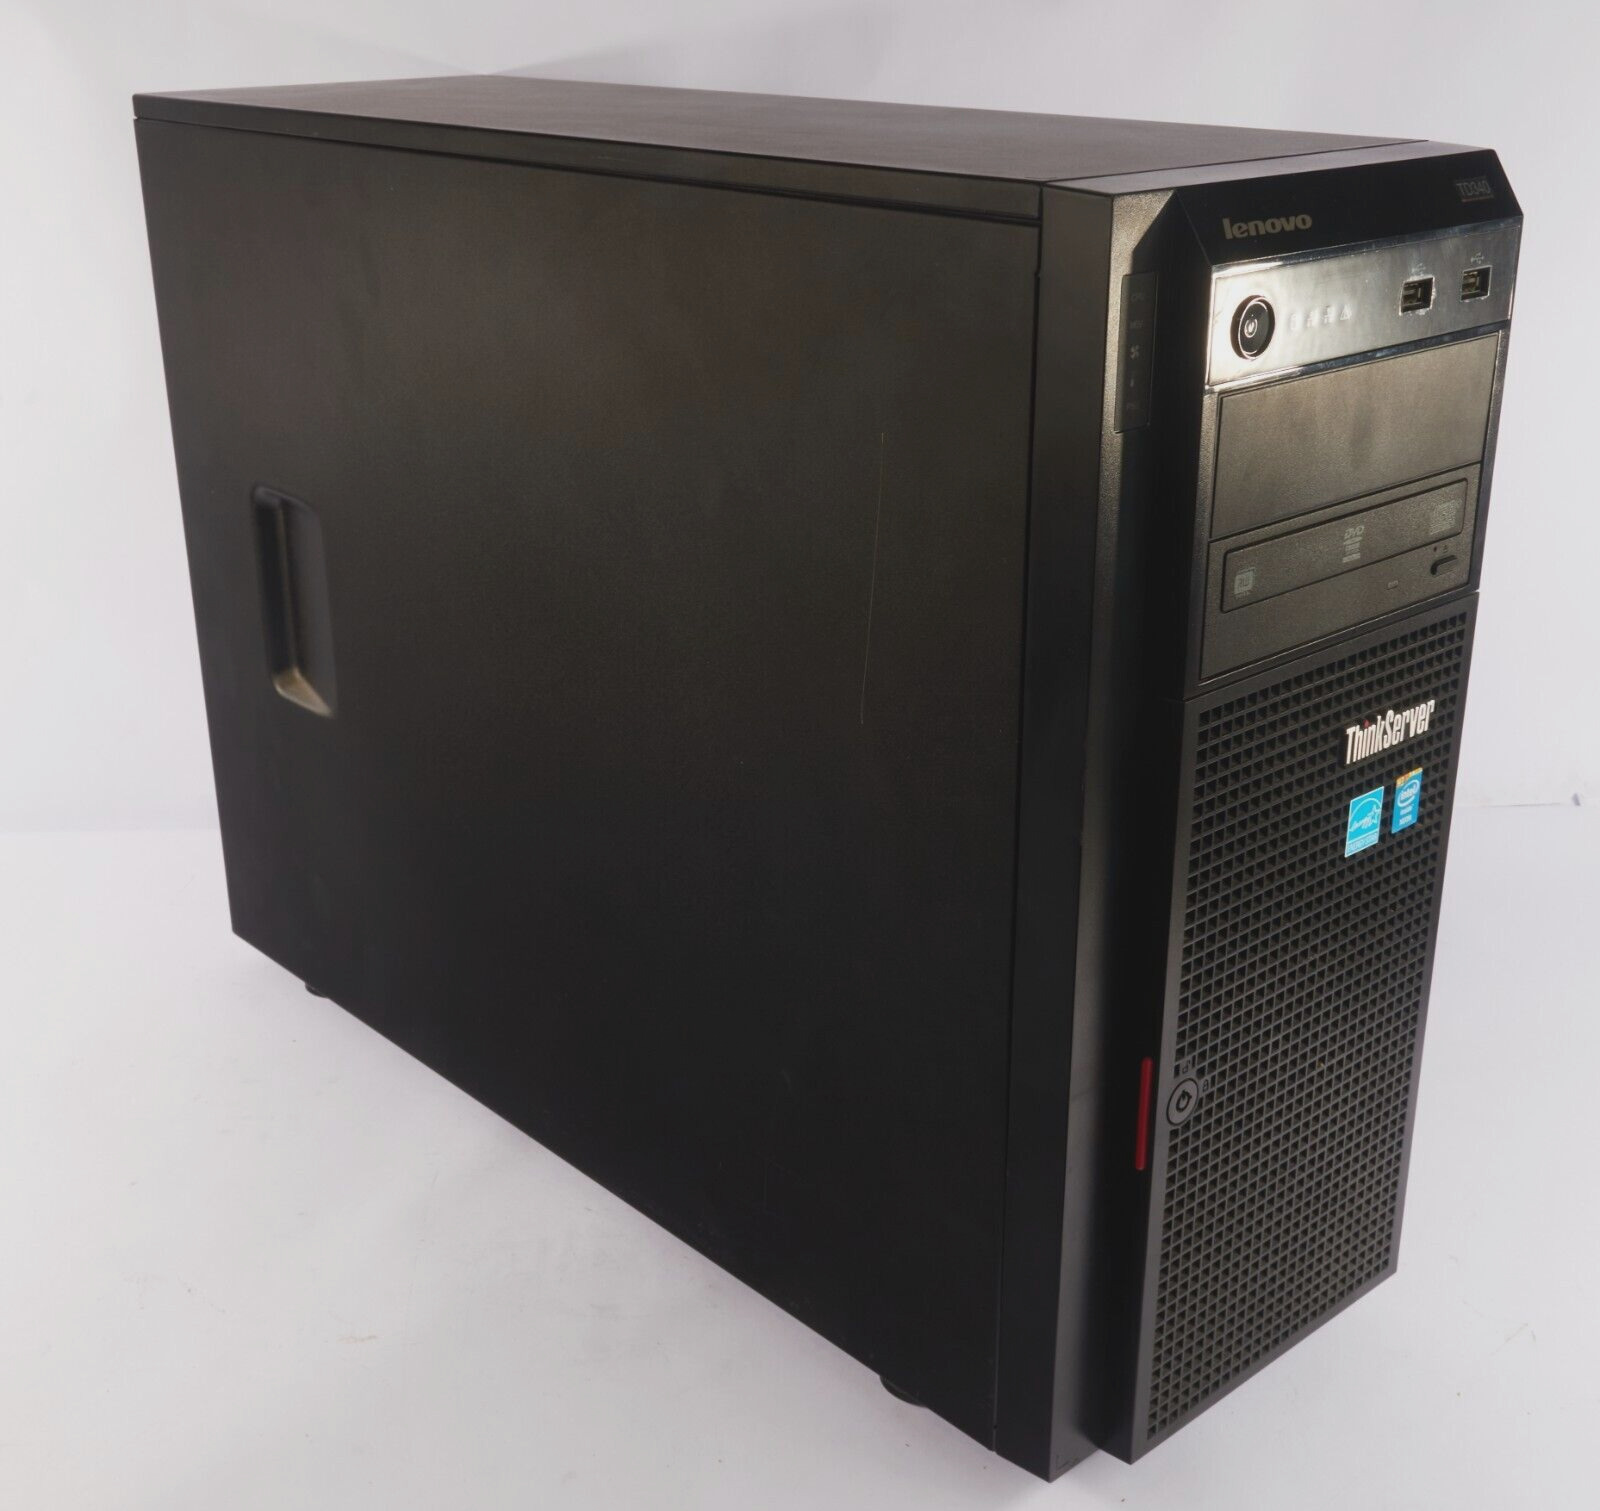 Lenovo Thinkserver TD340 - 2x Xeon E5-2420 V2, 64GB ECC, SAS Raid Ready - Tested